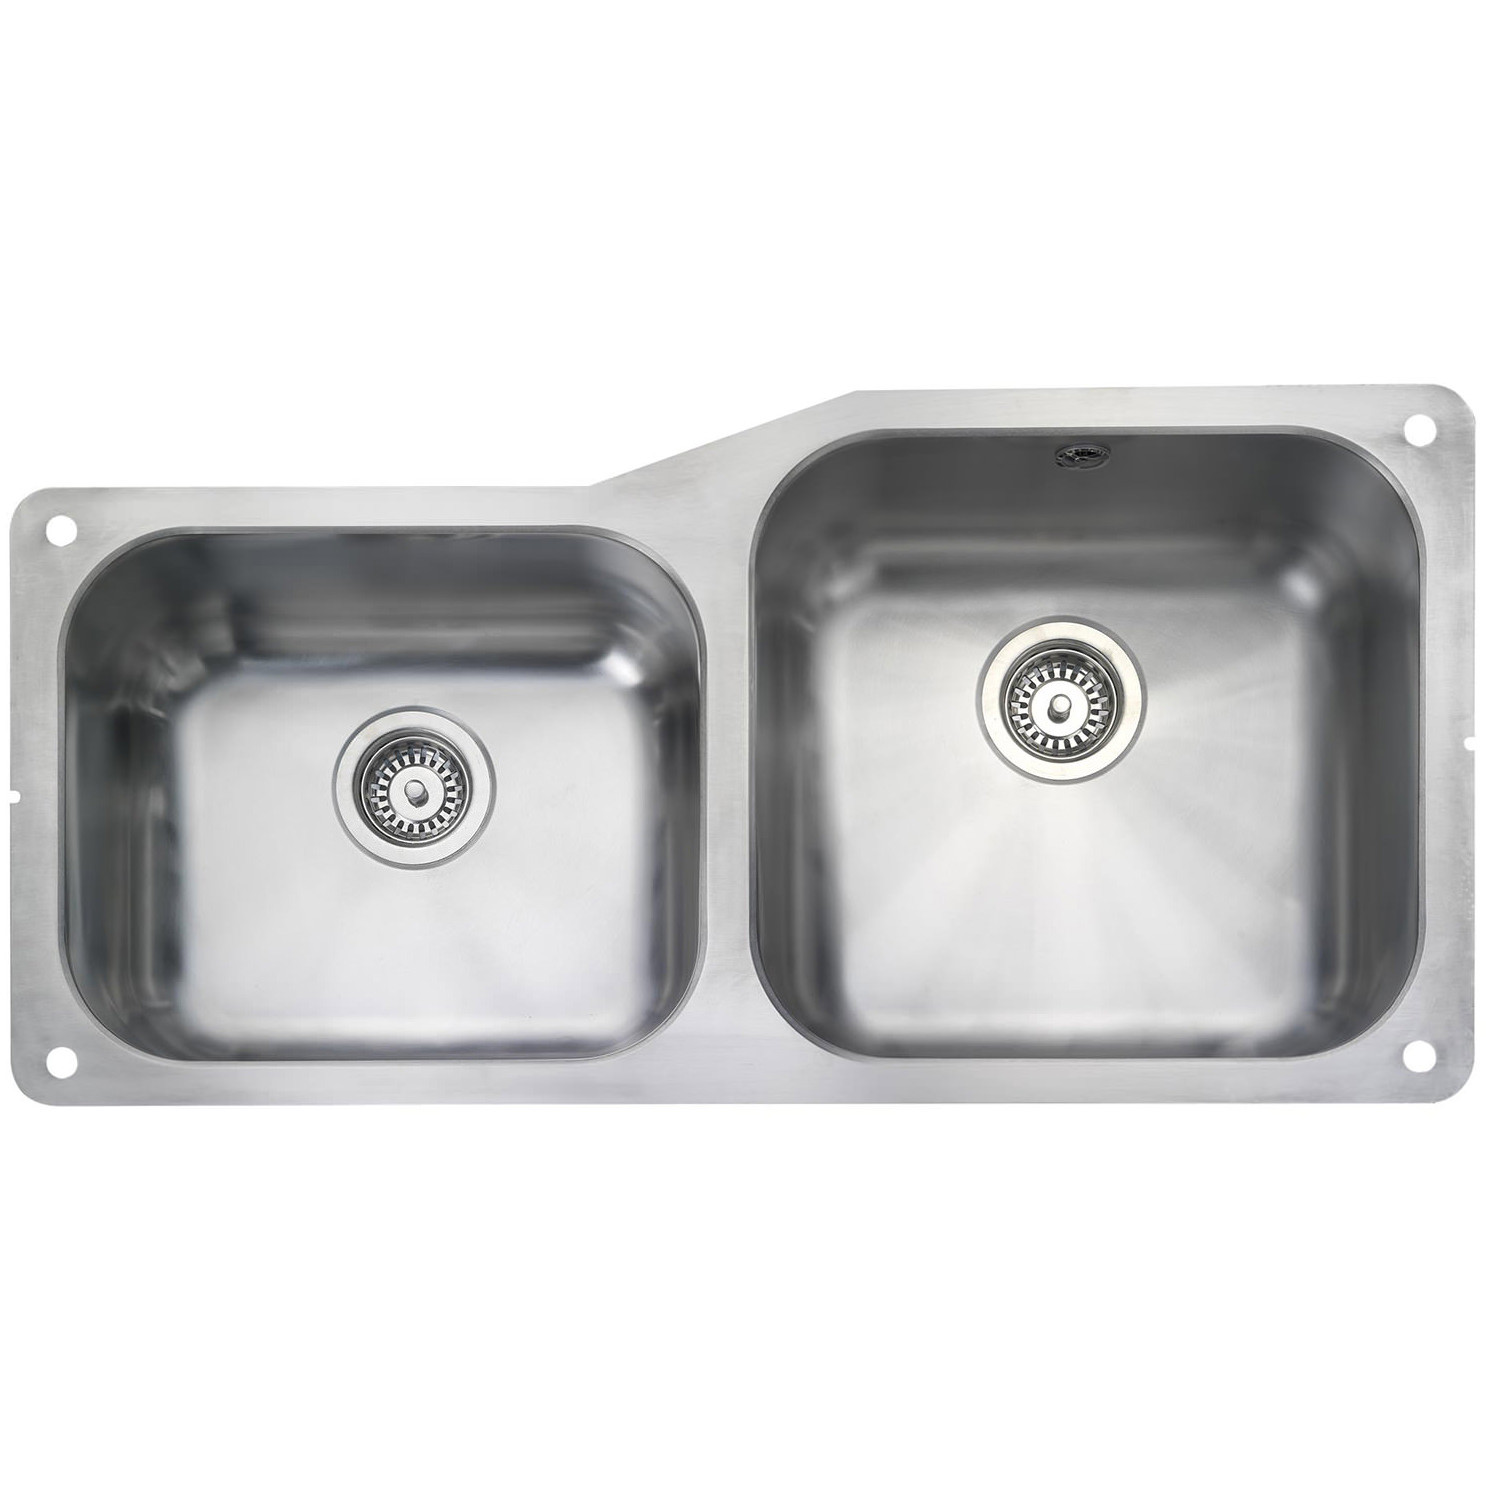 Small Undermount Kitchen Sink
 Rangemaster Atlantic Classic 2 Bowl Undermount Sink Small